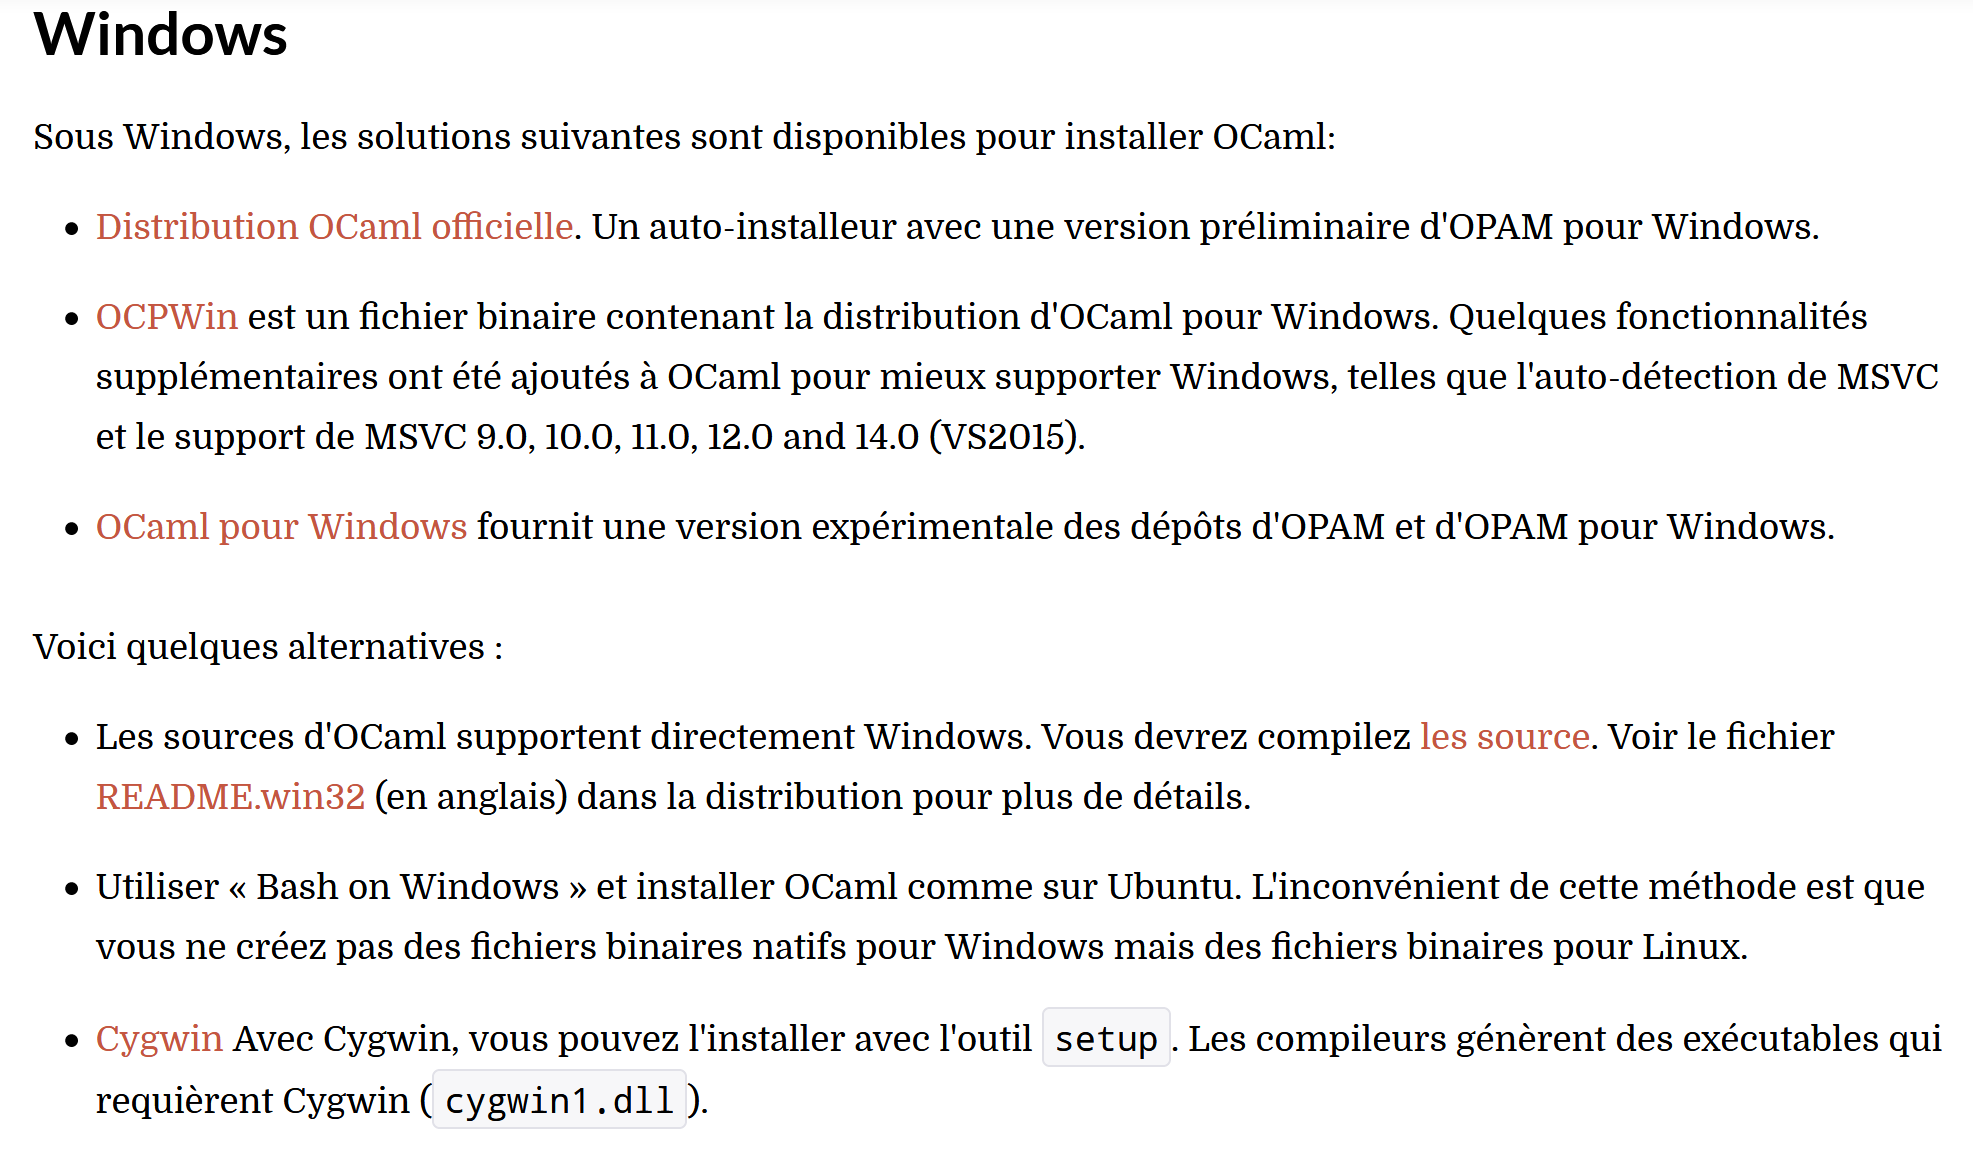 Screenshot of the OCaml installation options for Windows